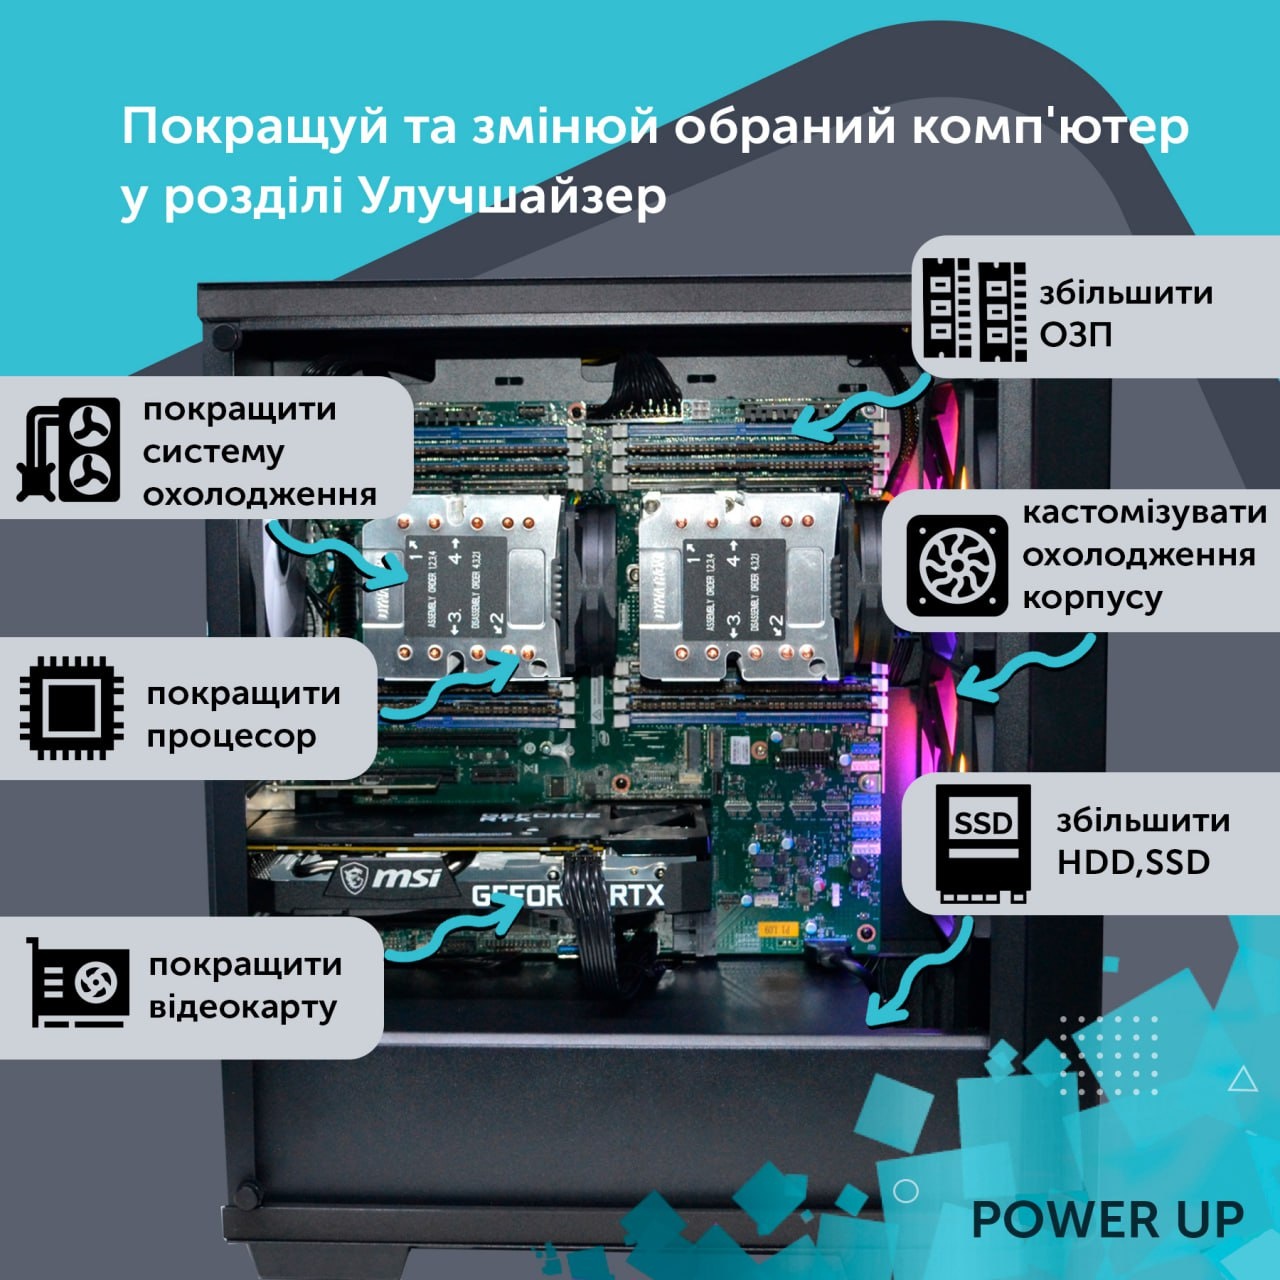 Рабочая станция PowerUp Desktop #24 Core i7 10700K/16 GB/HDD 1 TB/SSD 256GB/GeForce GTX 1660Ti 6GB